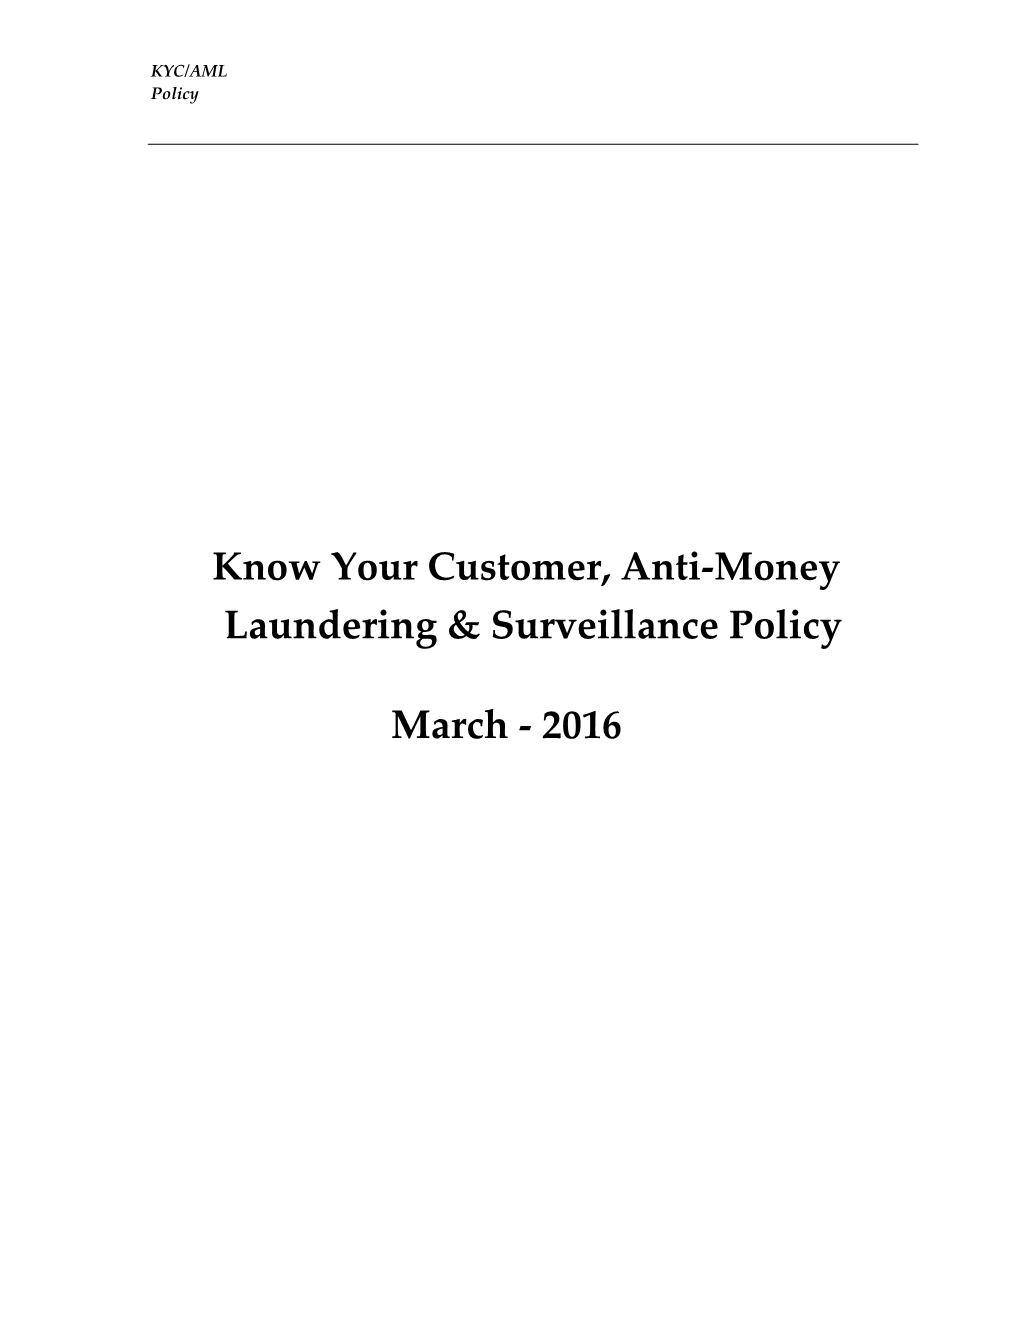 Know Your Customer, Anti-Money